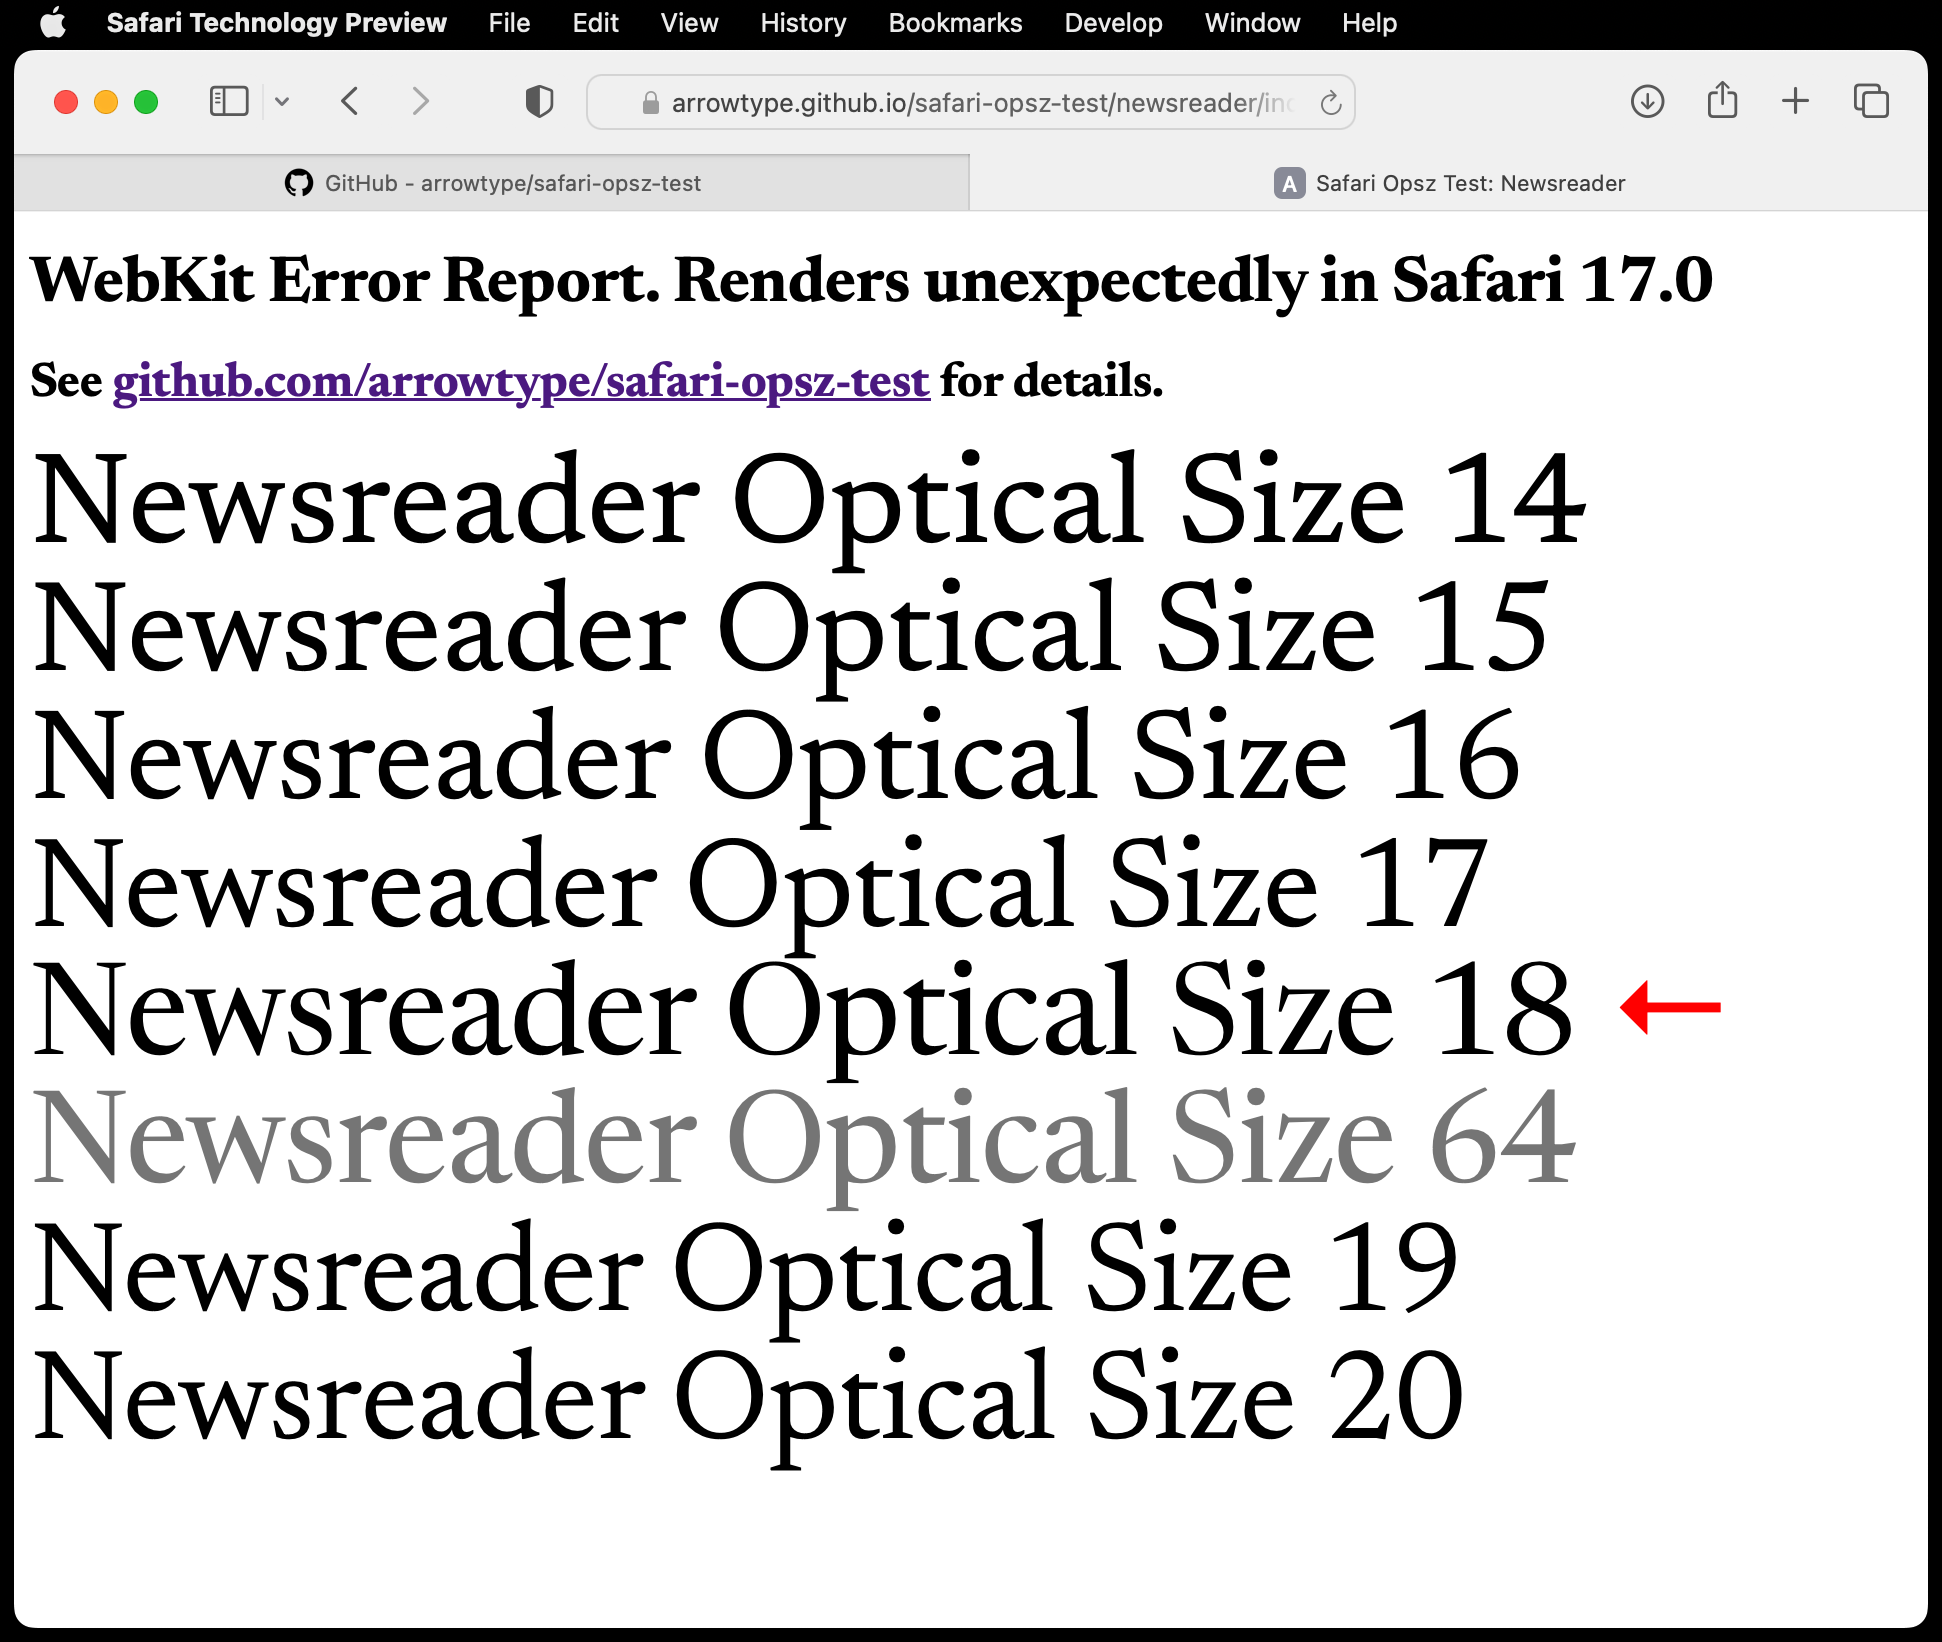 Safari Optical Size issue, Newsreader